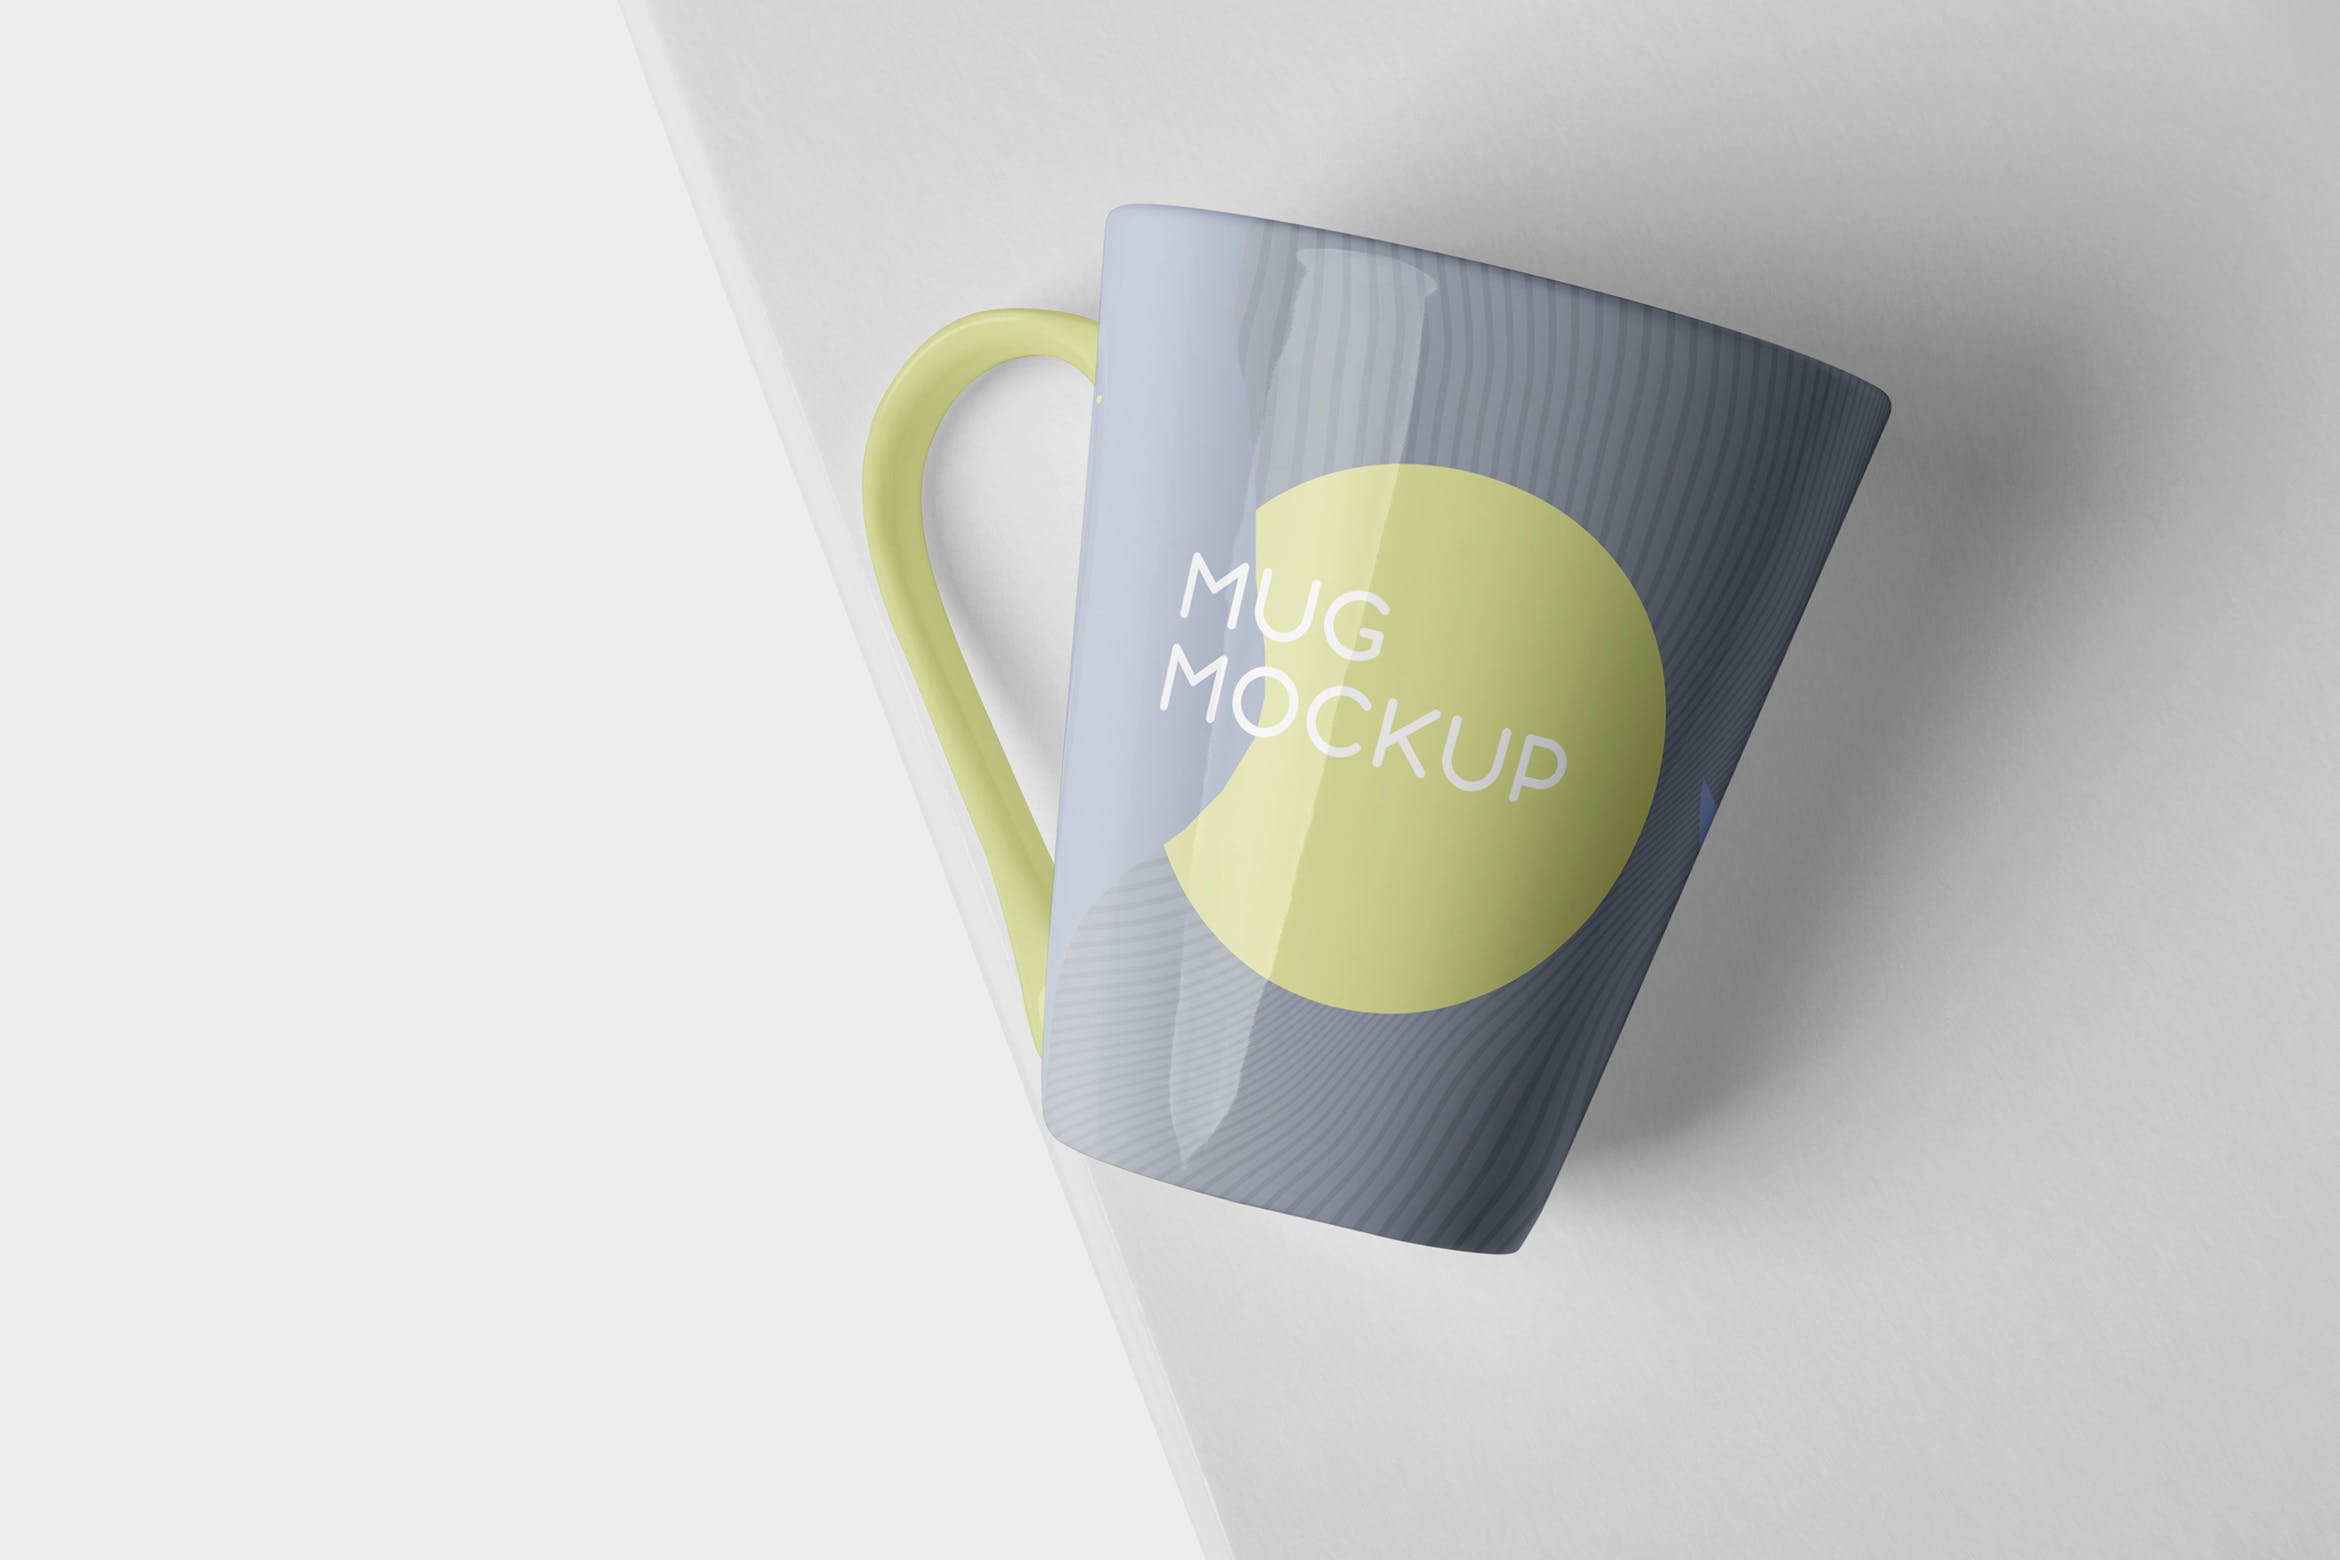 锥形马克杯图案设计非凡图库精选 Mug Mockup – Cone Shaped插图